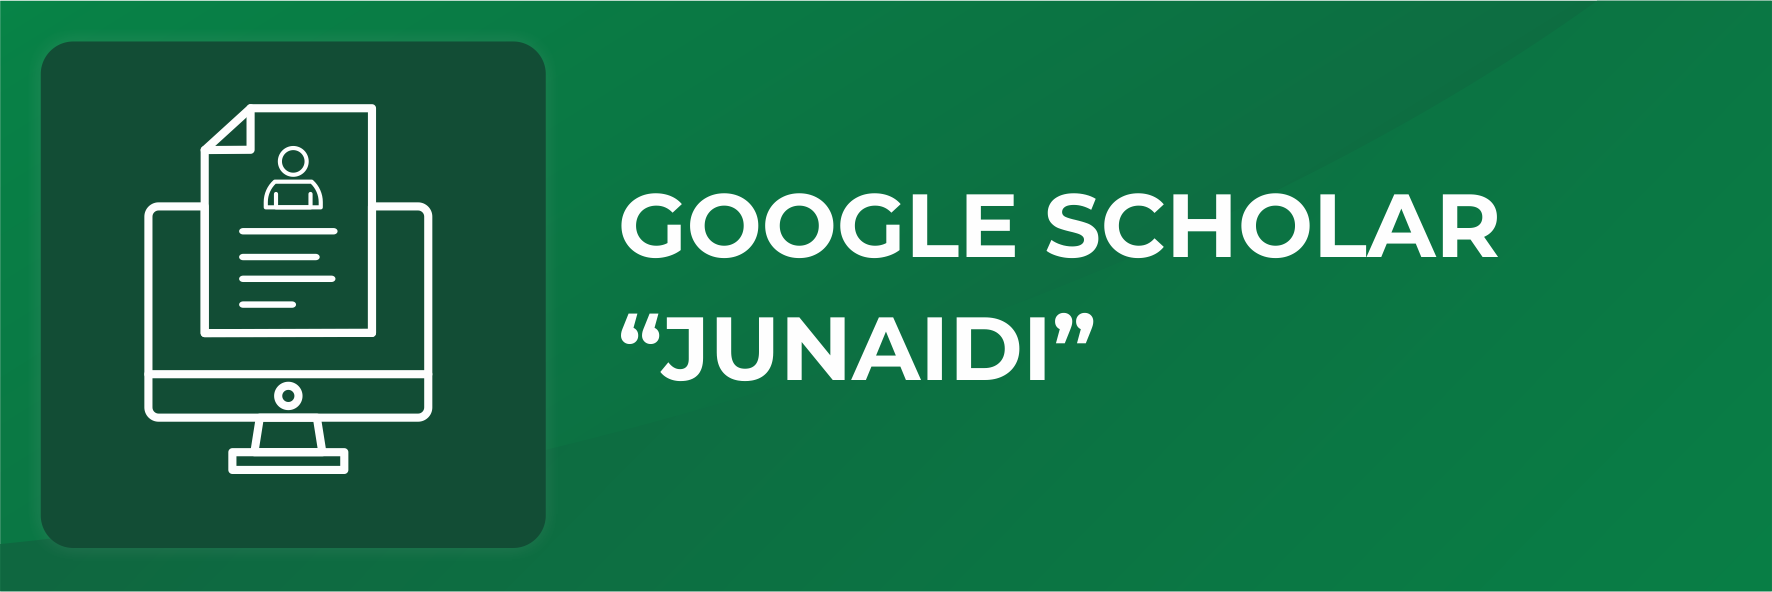 Junaidi